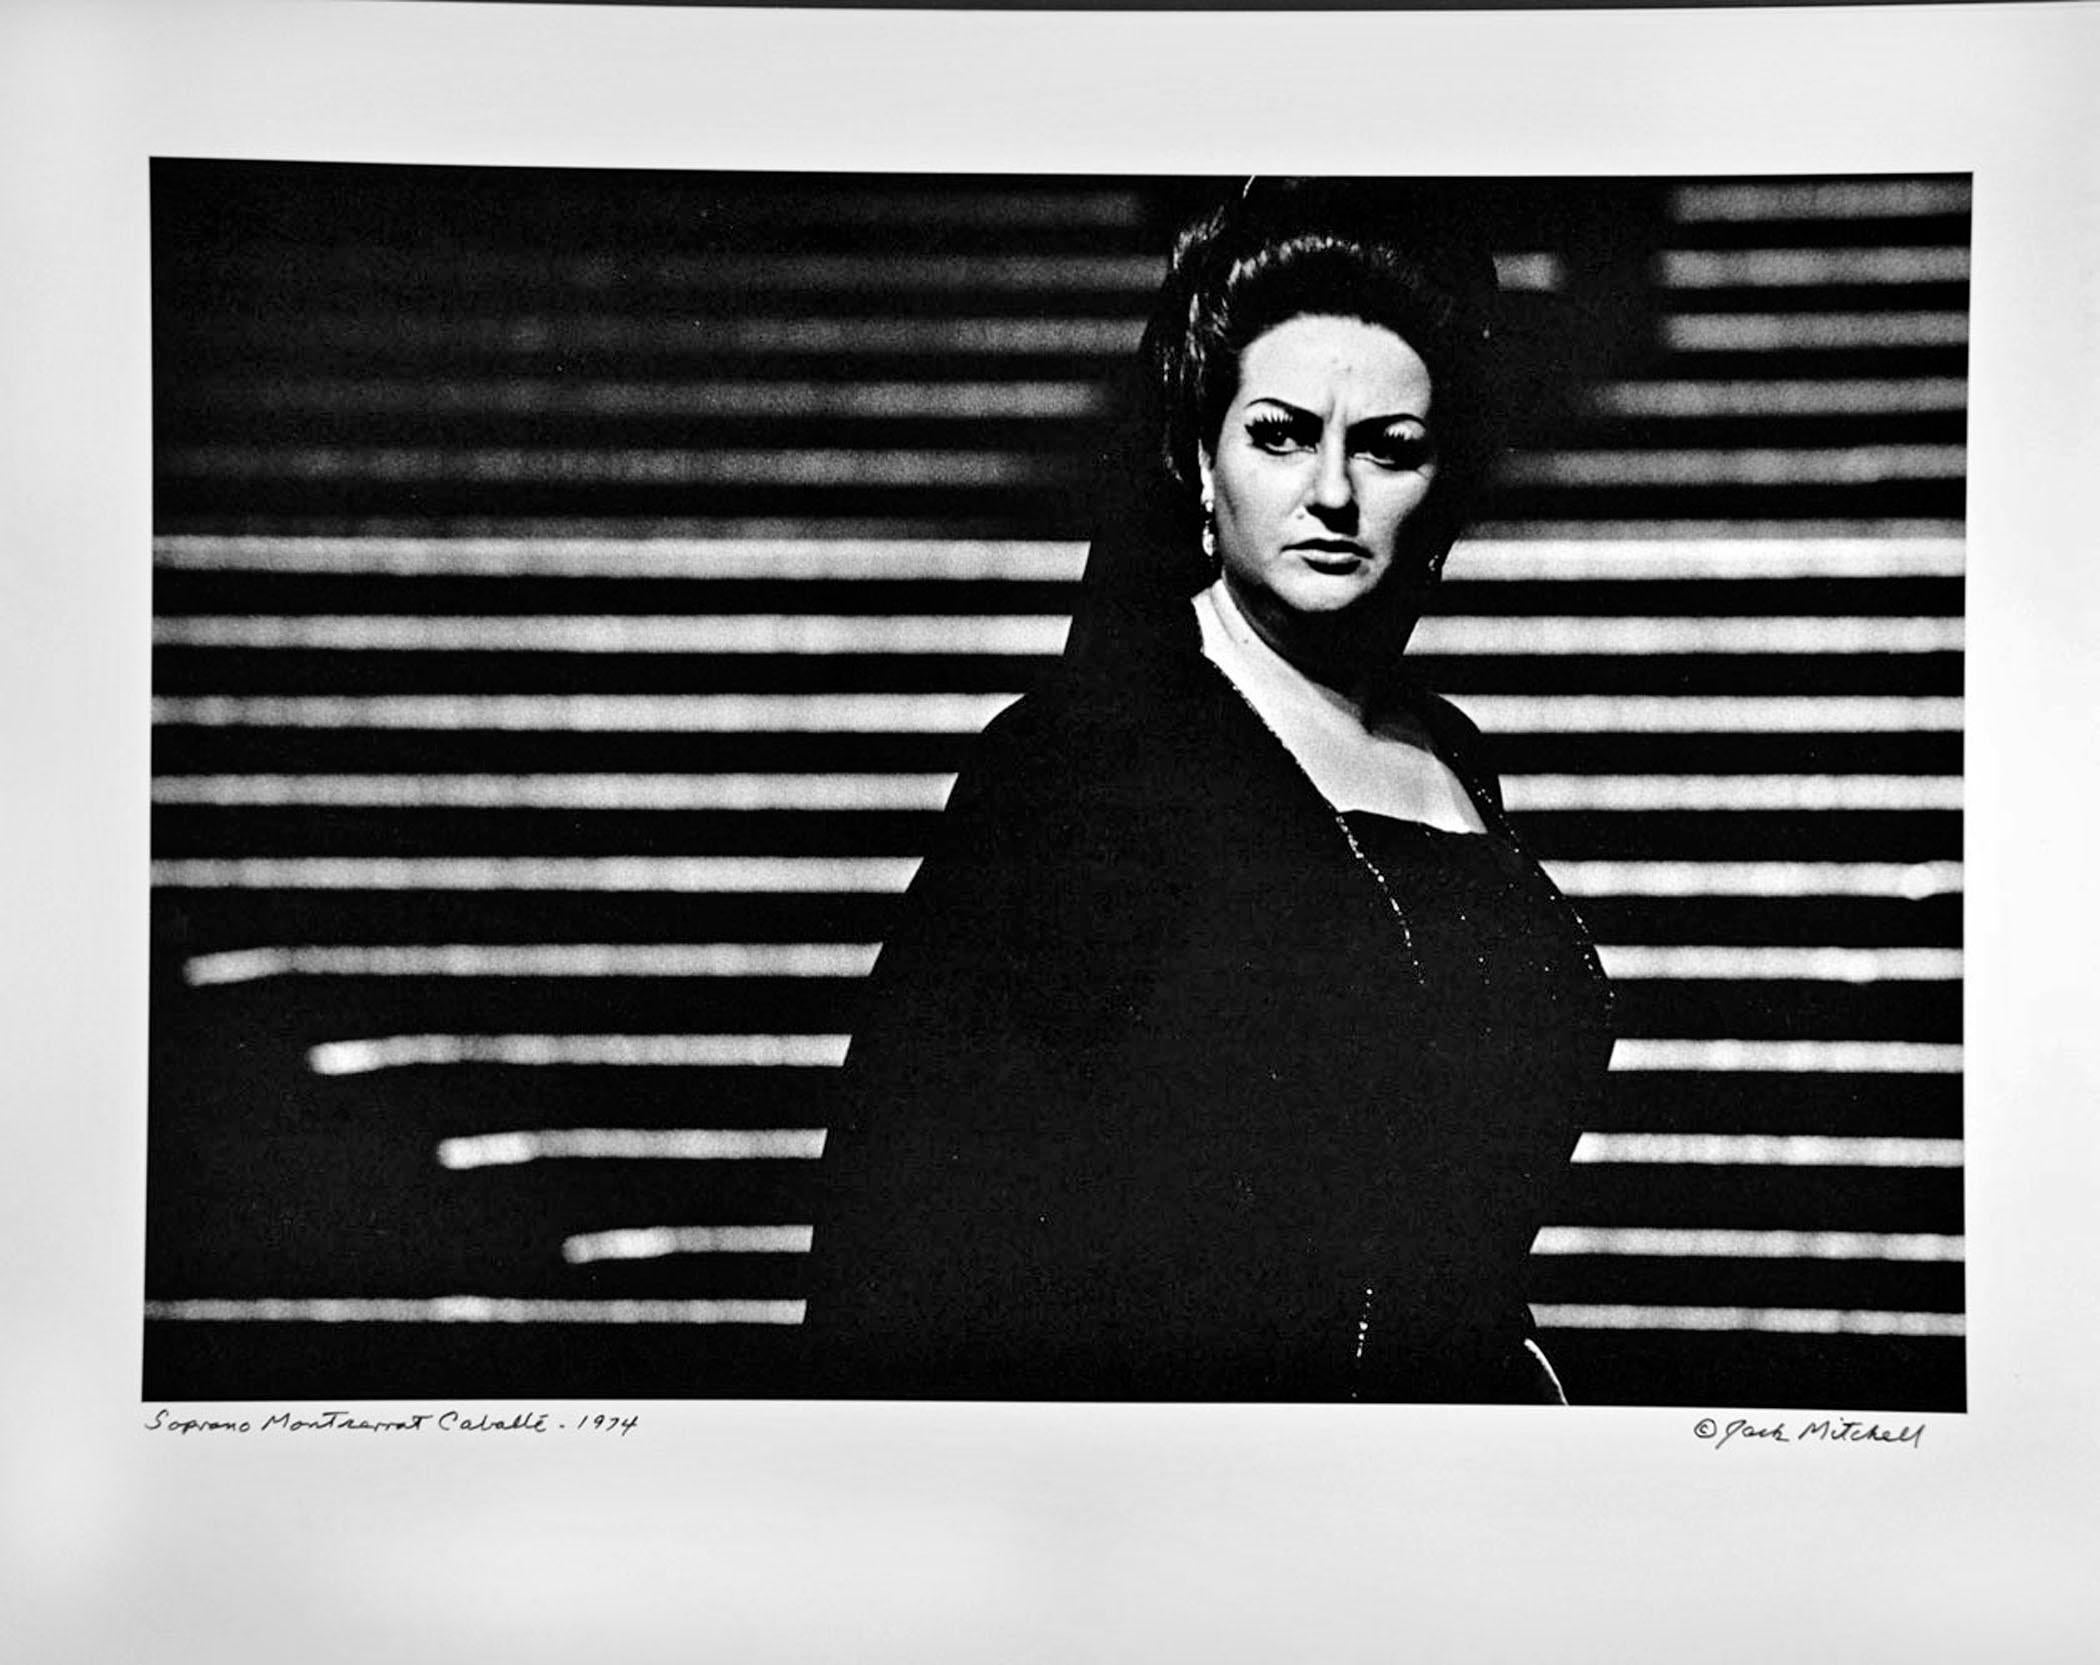 Jack Mitchell Black and White Photograph - Spanish soprano Monserrat Caballe performing at the Metropolitan Opera